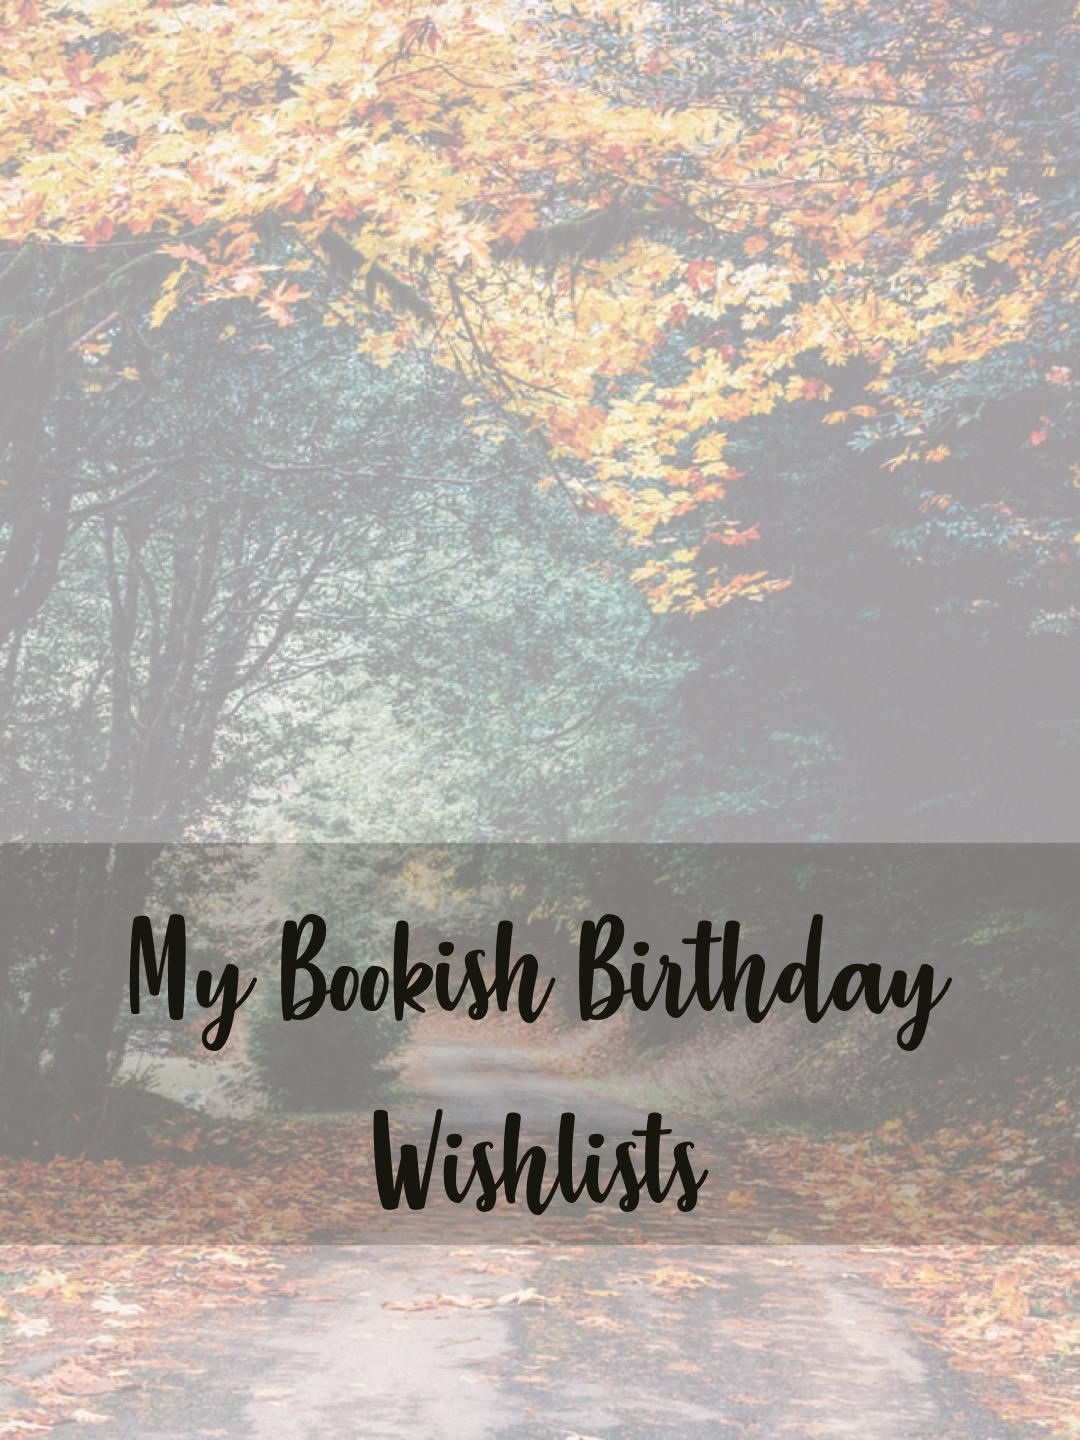 My Bookish Birthday Wishlists